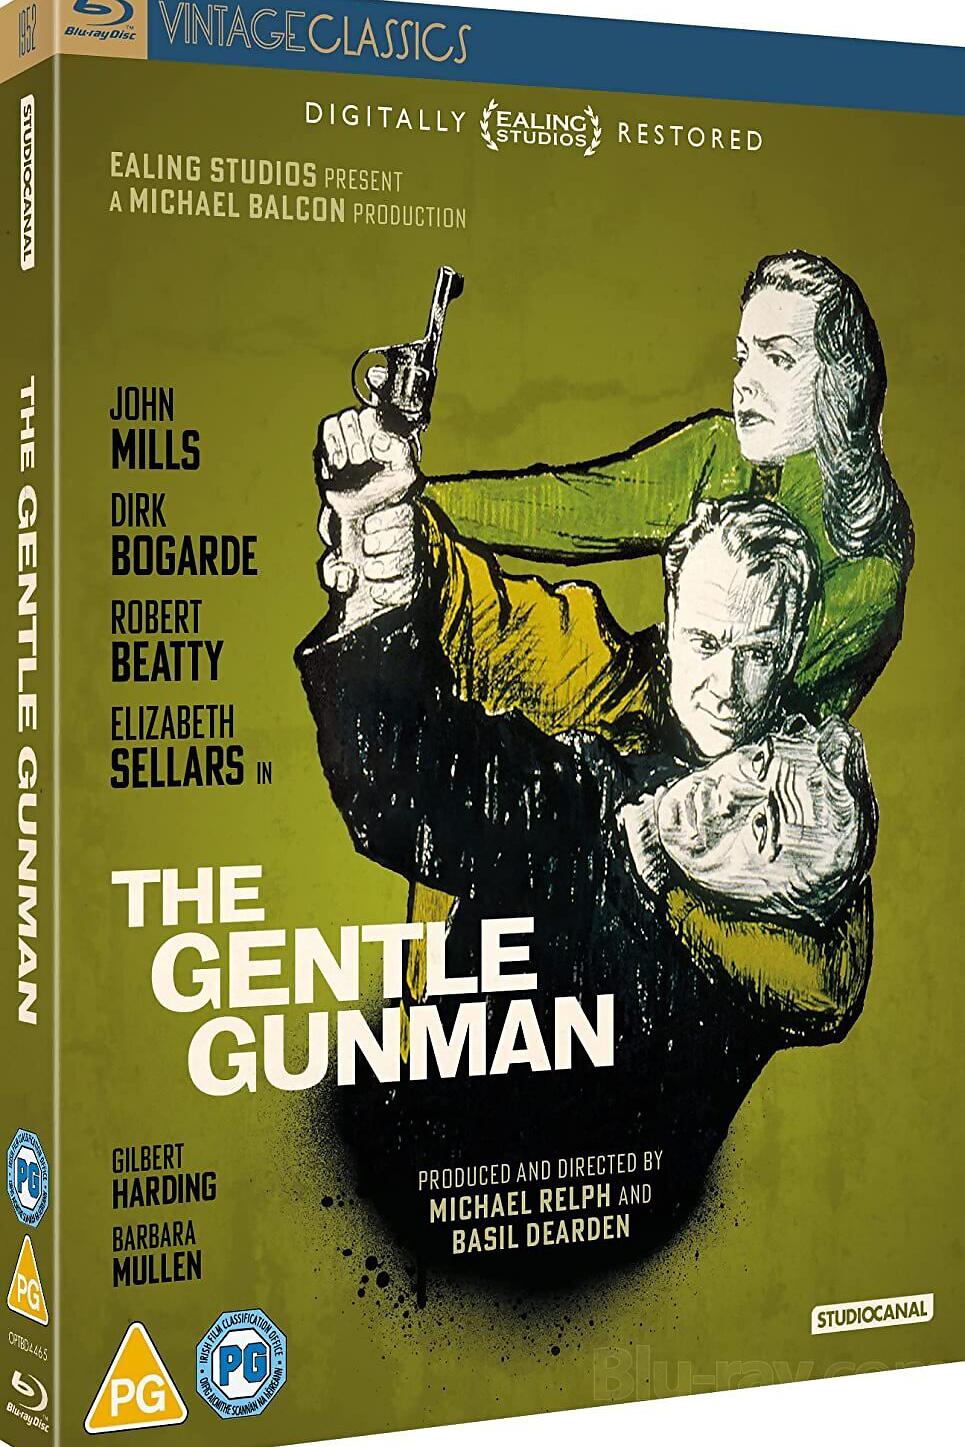 绅士枪匪 The.Gentle.Gunman.1952.1080p.BluRay.REMUX.AVC.LPCM.2.0-FGT 22.87GB